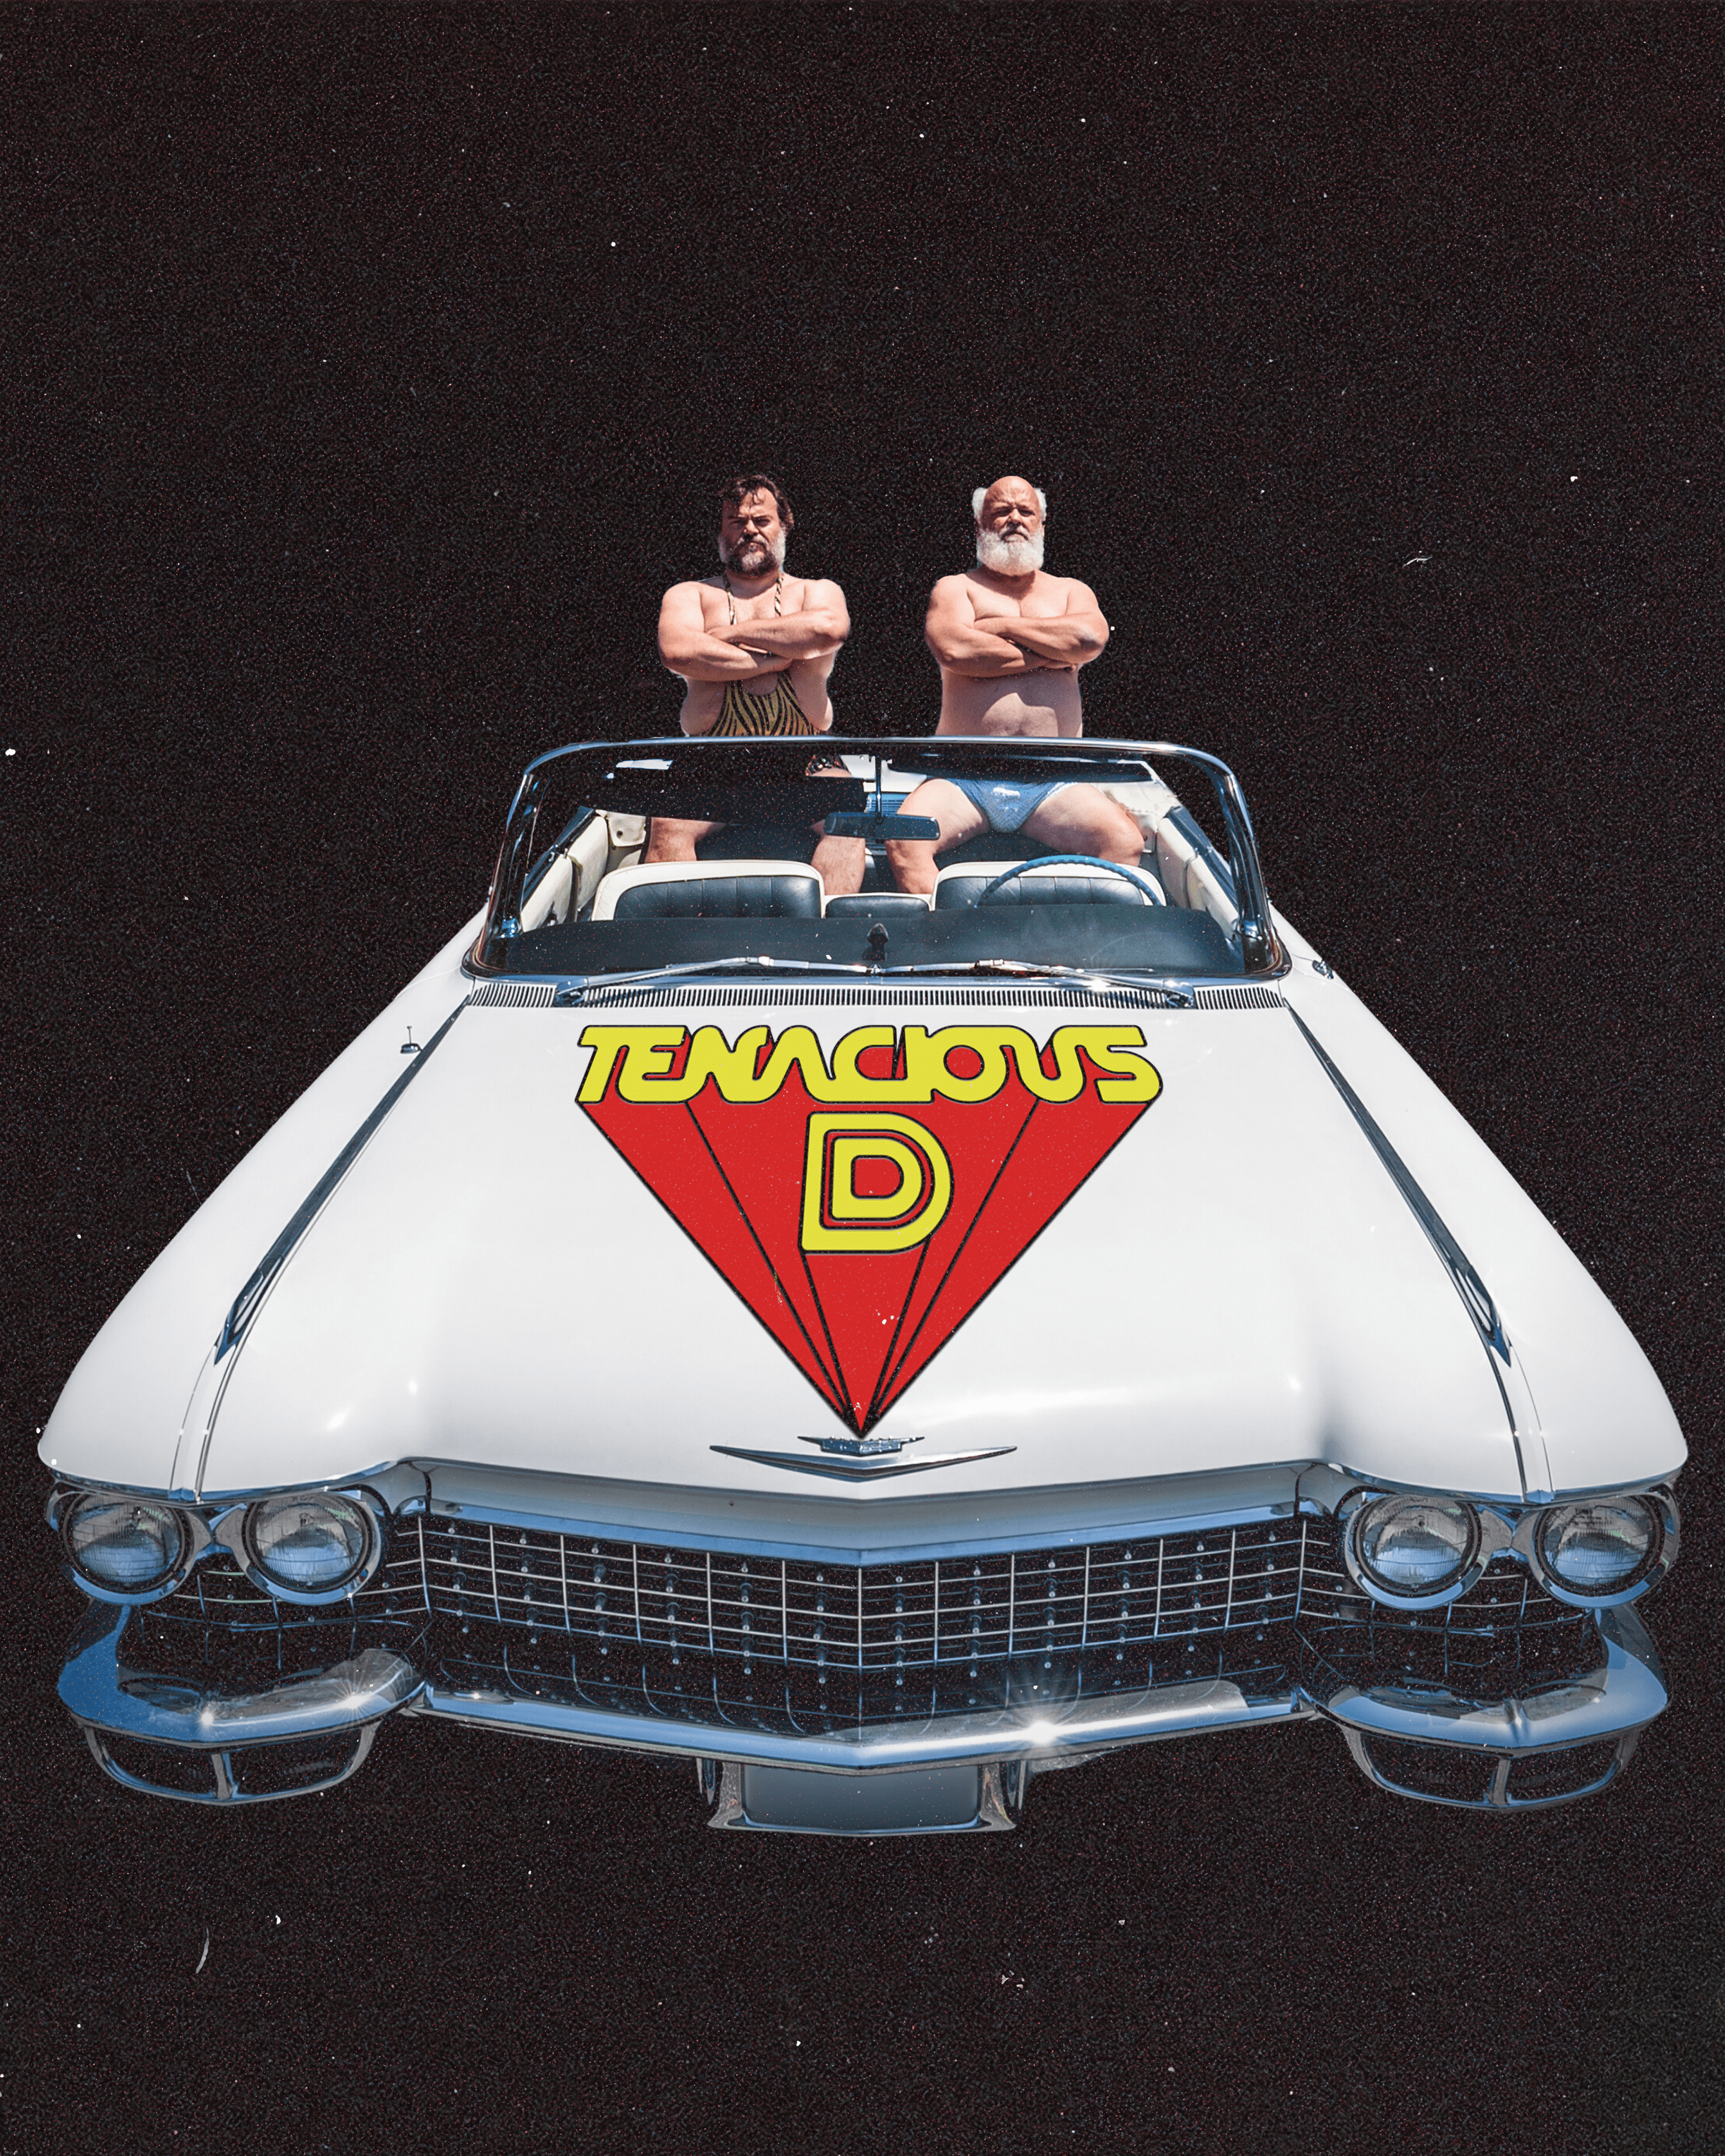 Tenacious D posed in classic white car / AEG Presents Las Vegas